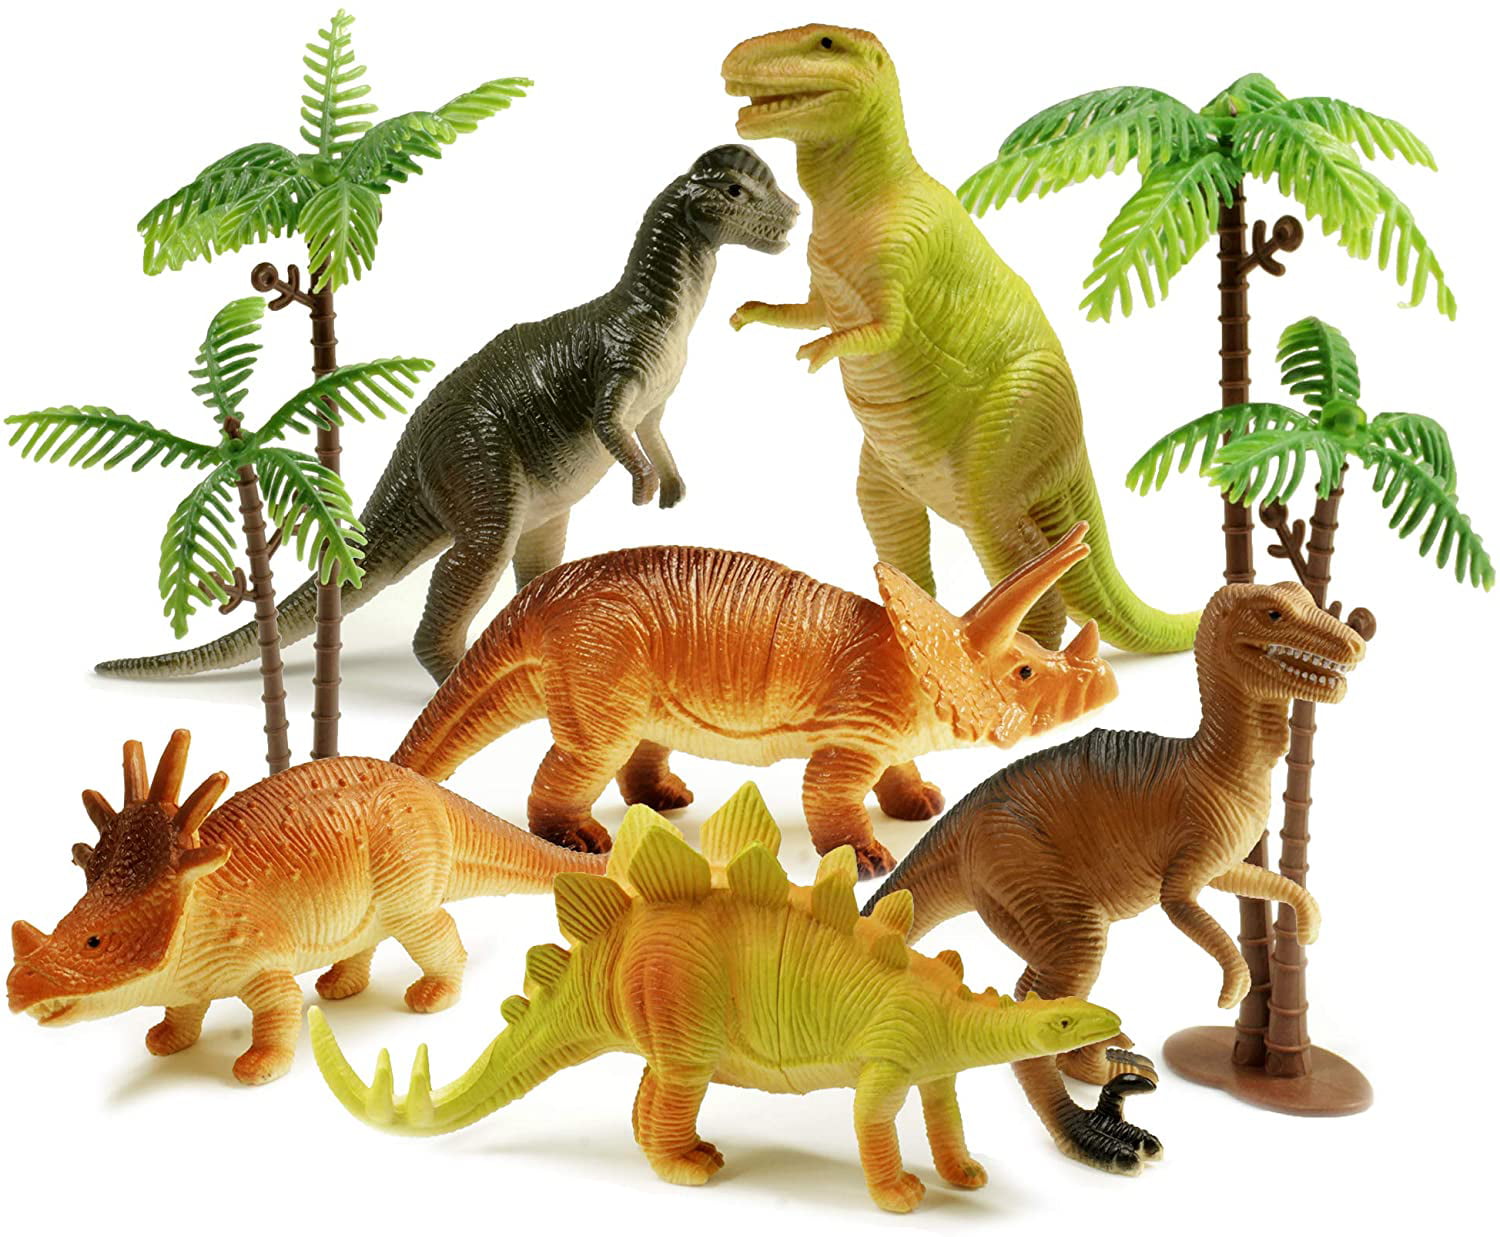 Realistic Dinosaur Figure Toys 6 Pack 7" Large Size Plastic Dinosaur Set for...